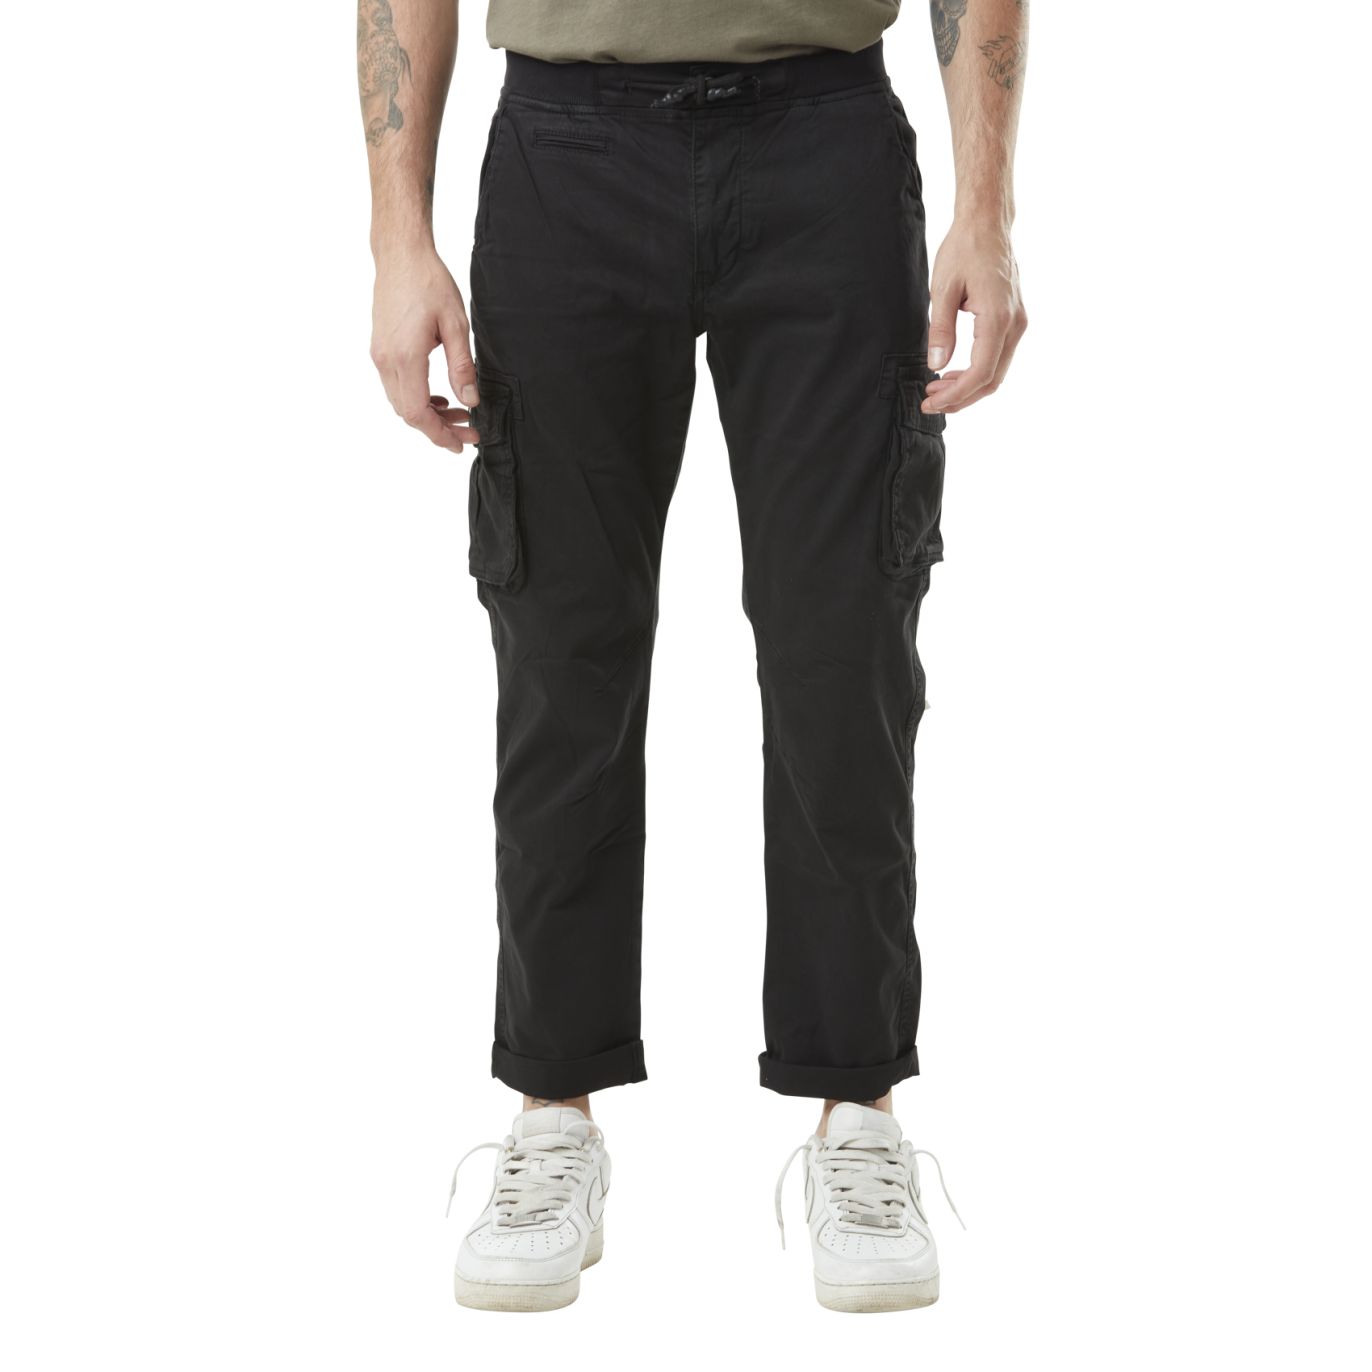 Pantalon de jogging cargo utilitaire noir